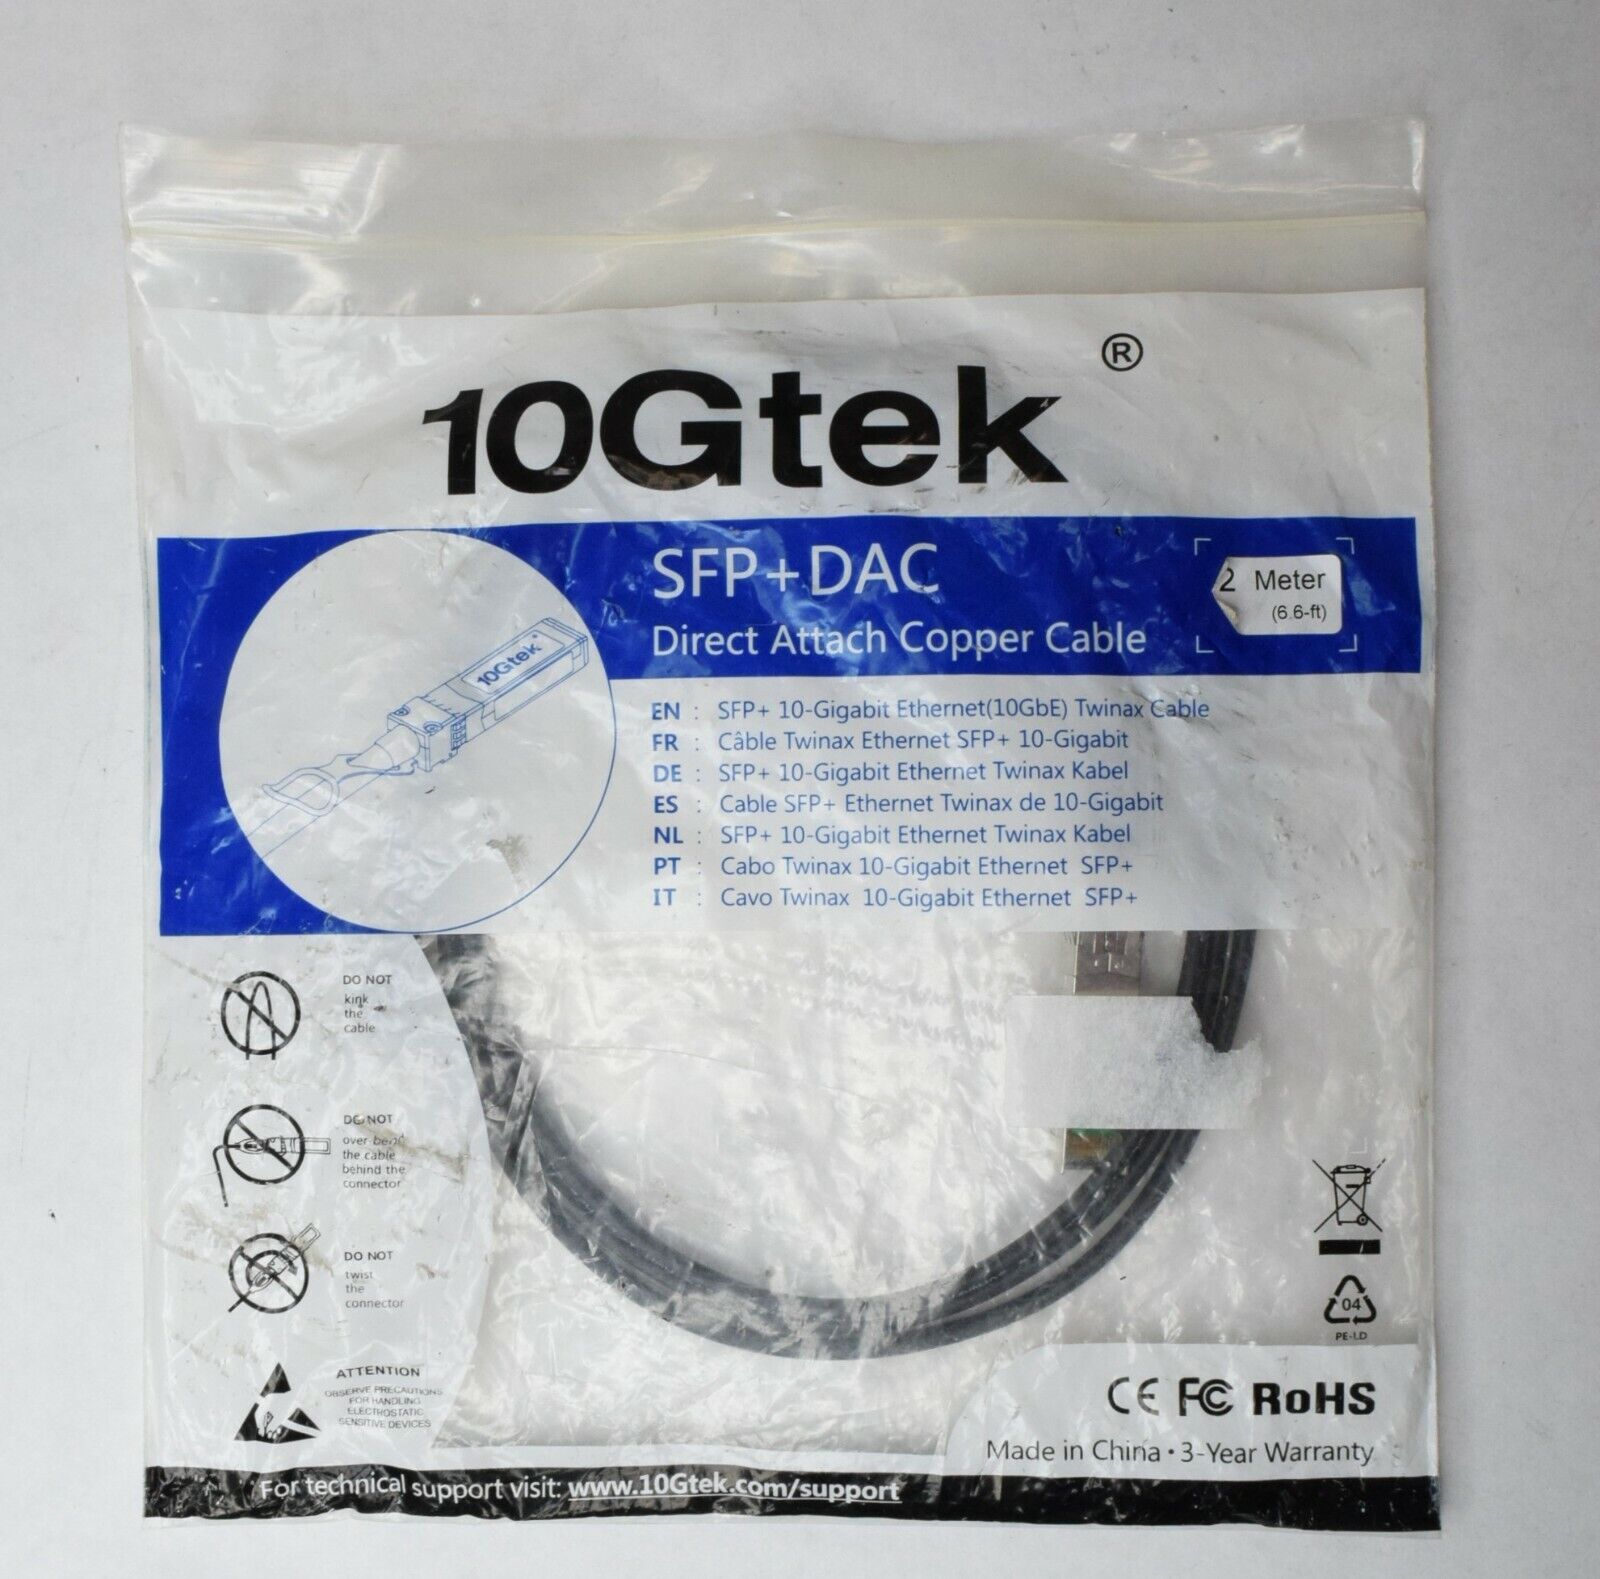 10Gtek 10GB  SFP+ DAC Twinax Cable Direct Attach Copper Cable CAB-10GSFP-P2M